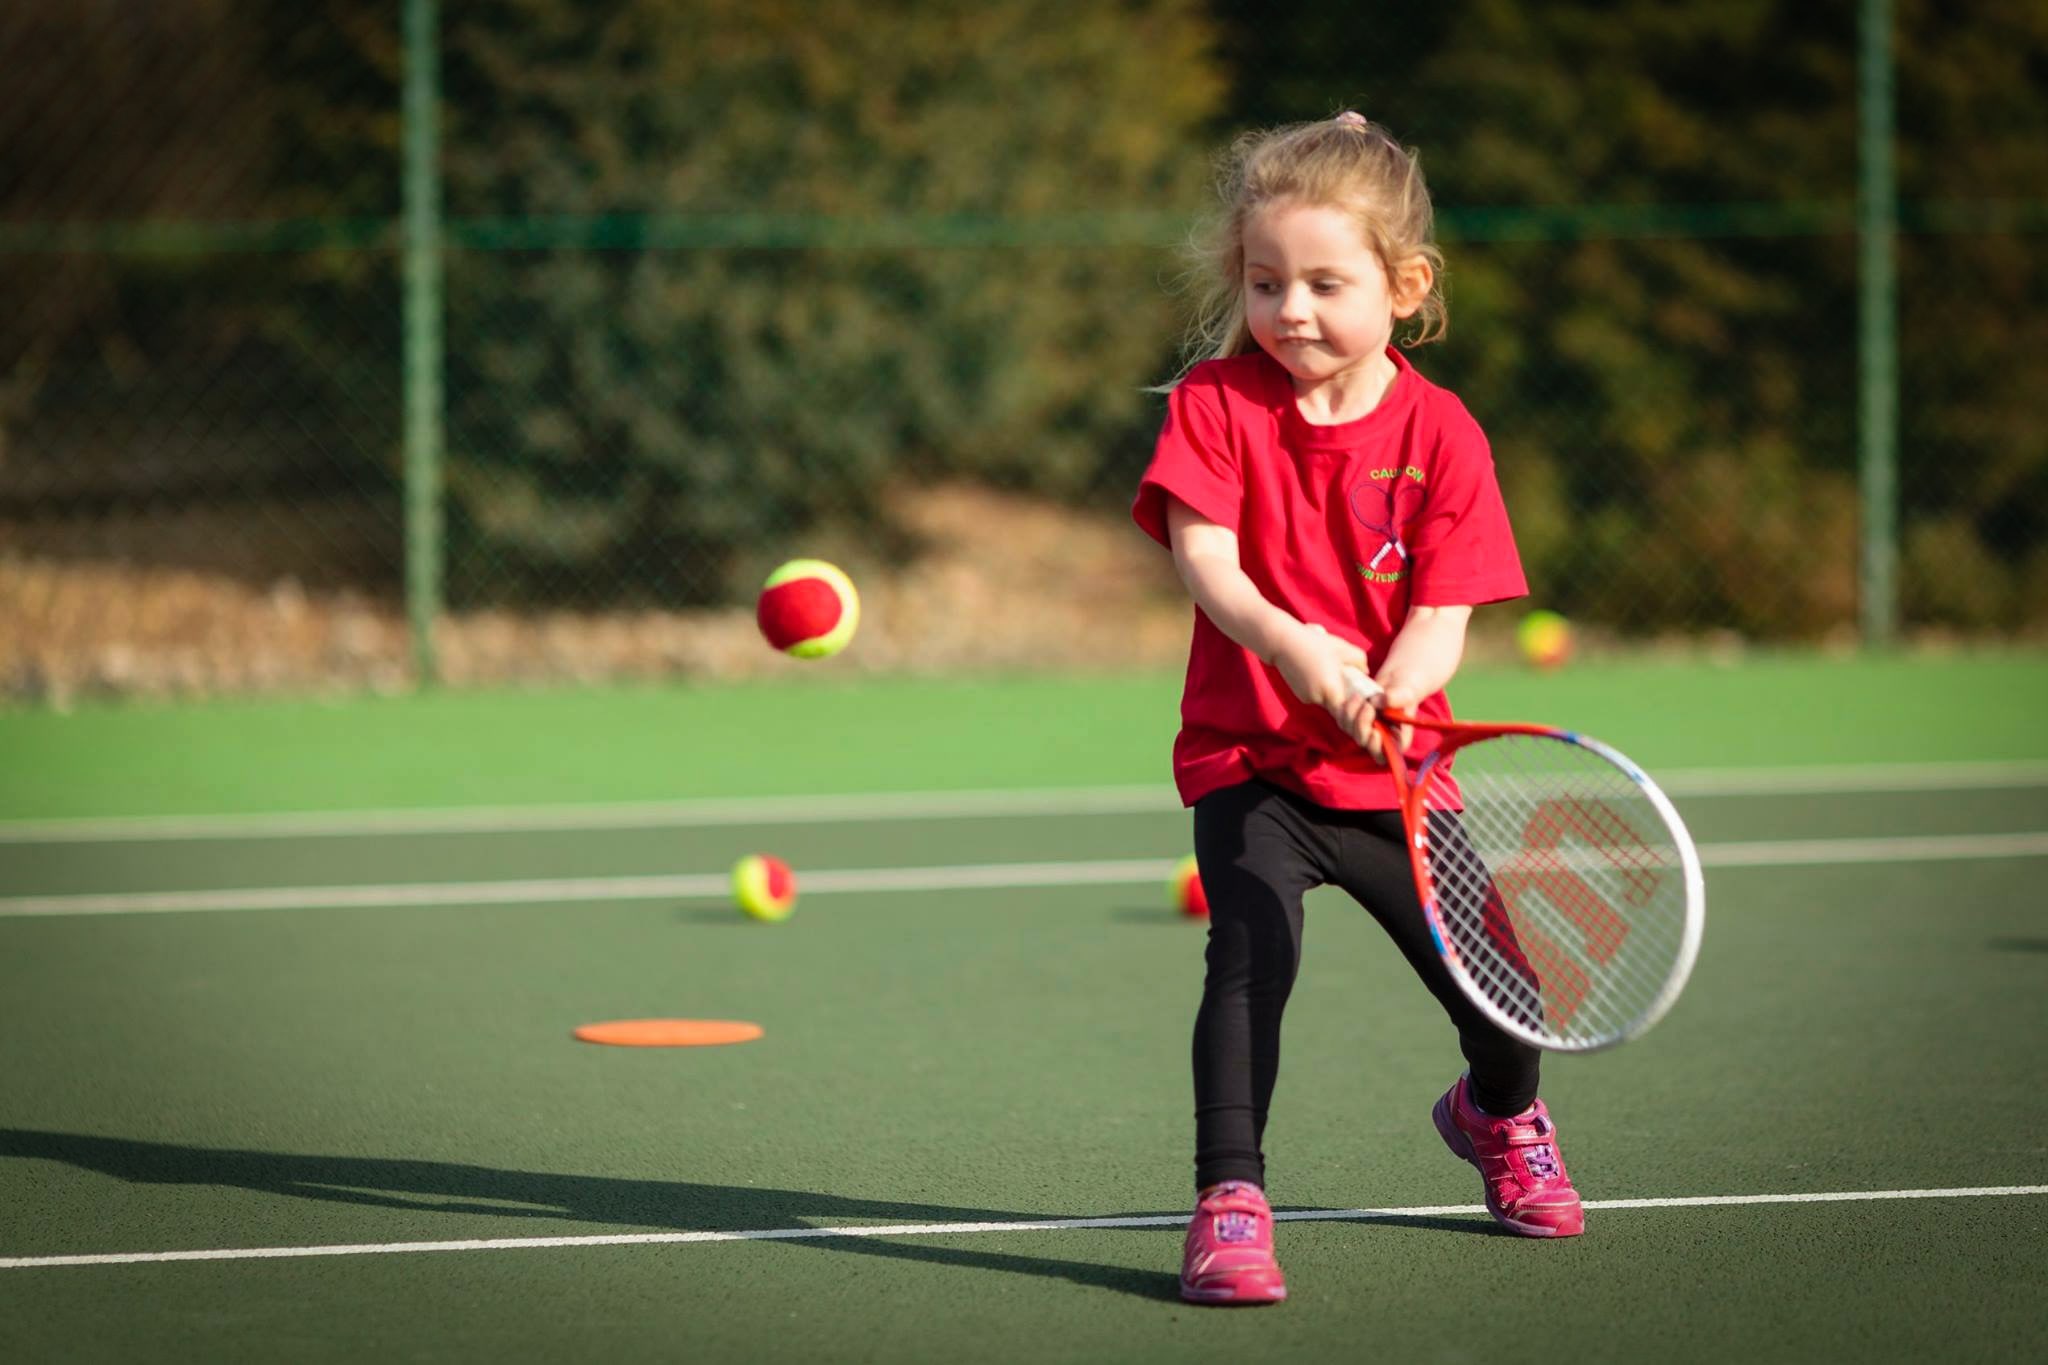 Top 5 Best Kids Tennis Racket 2022 Review & Buying Guide